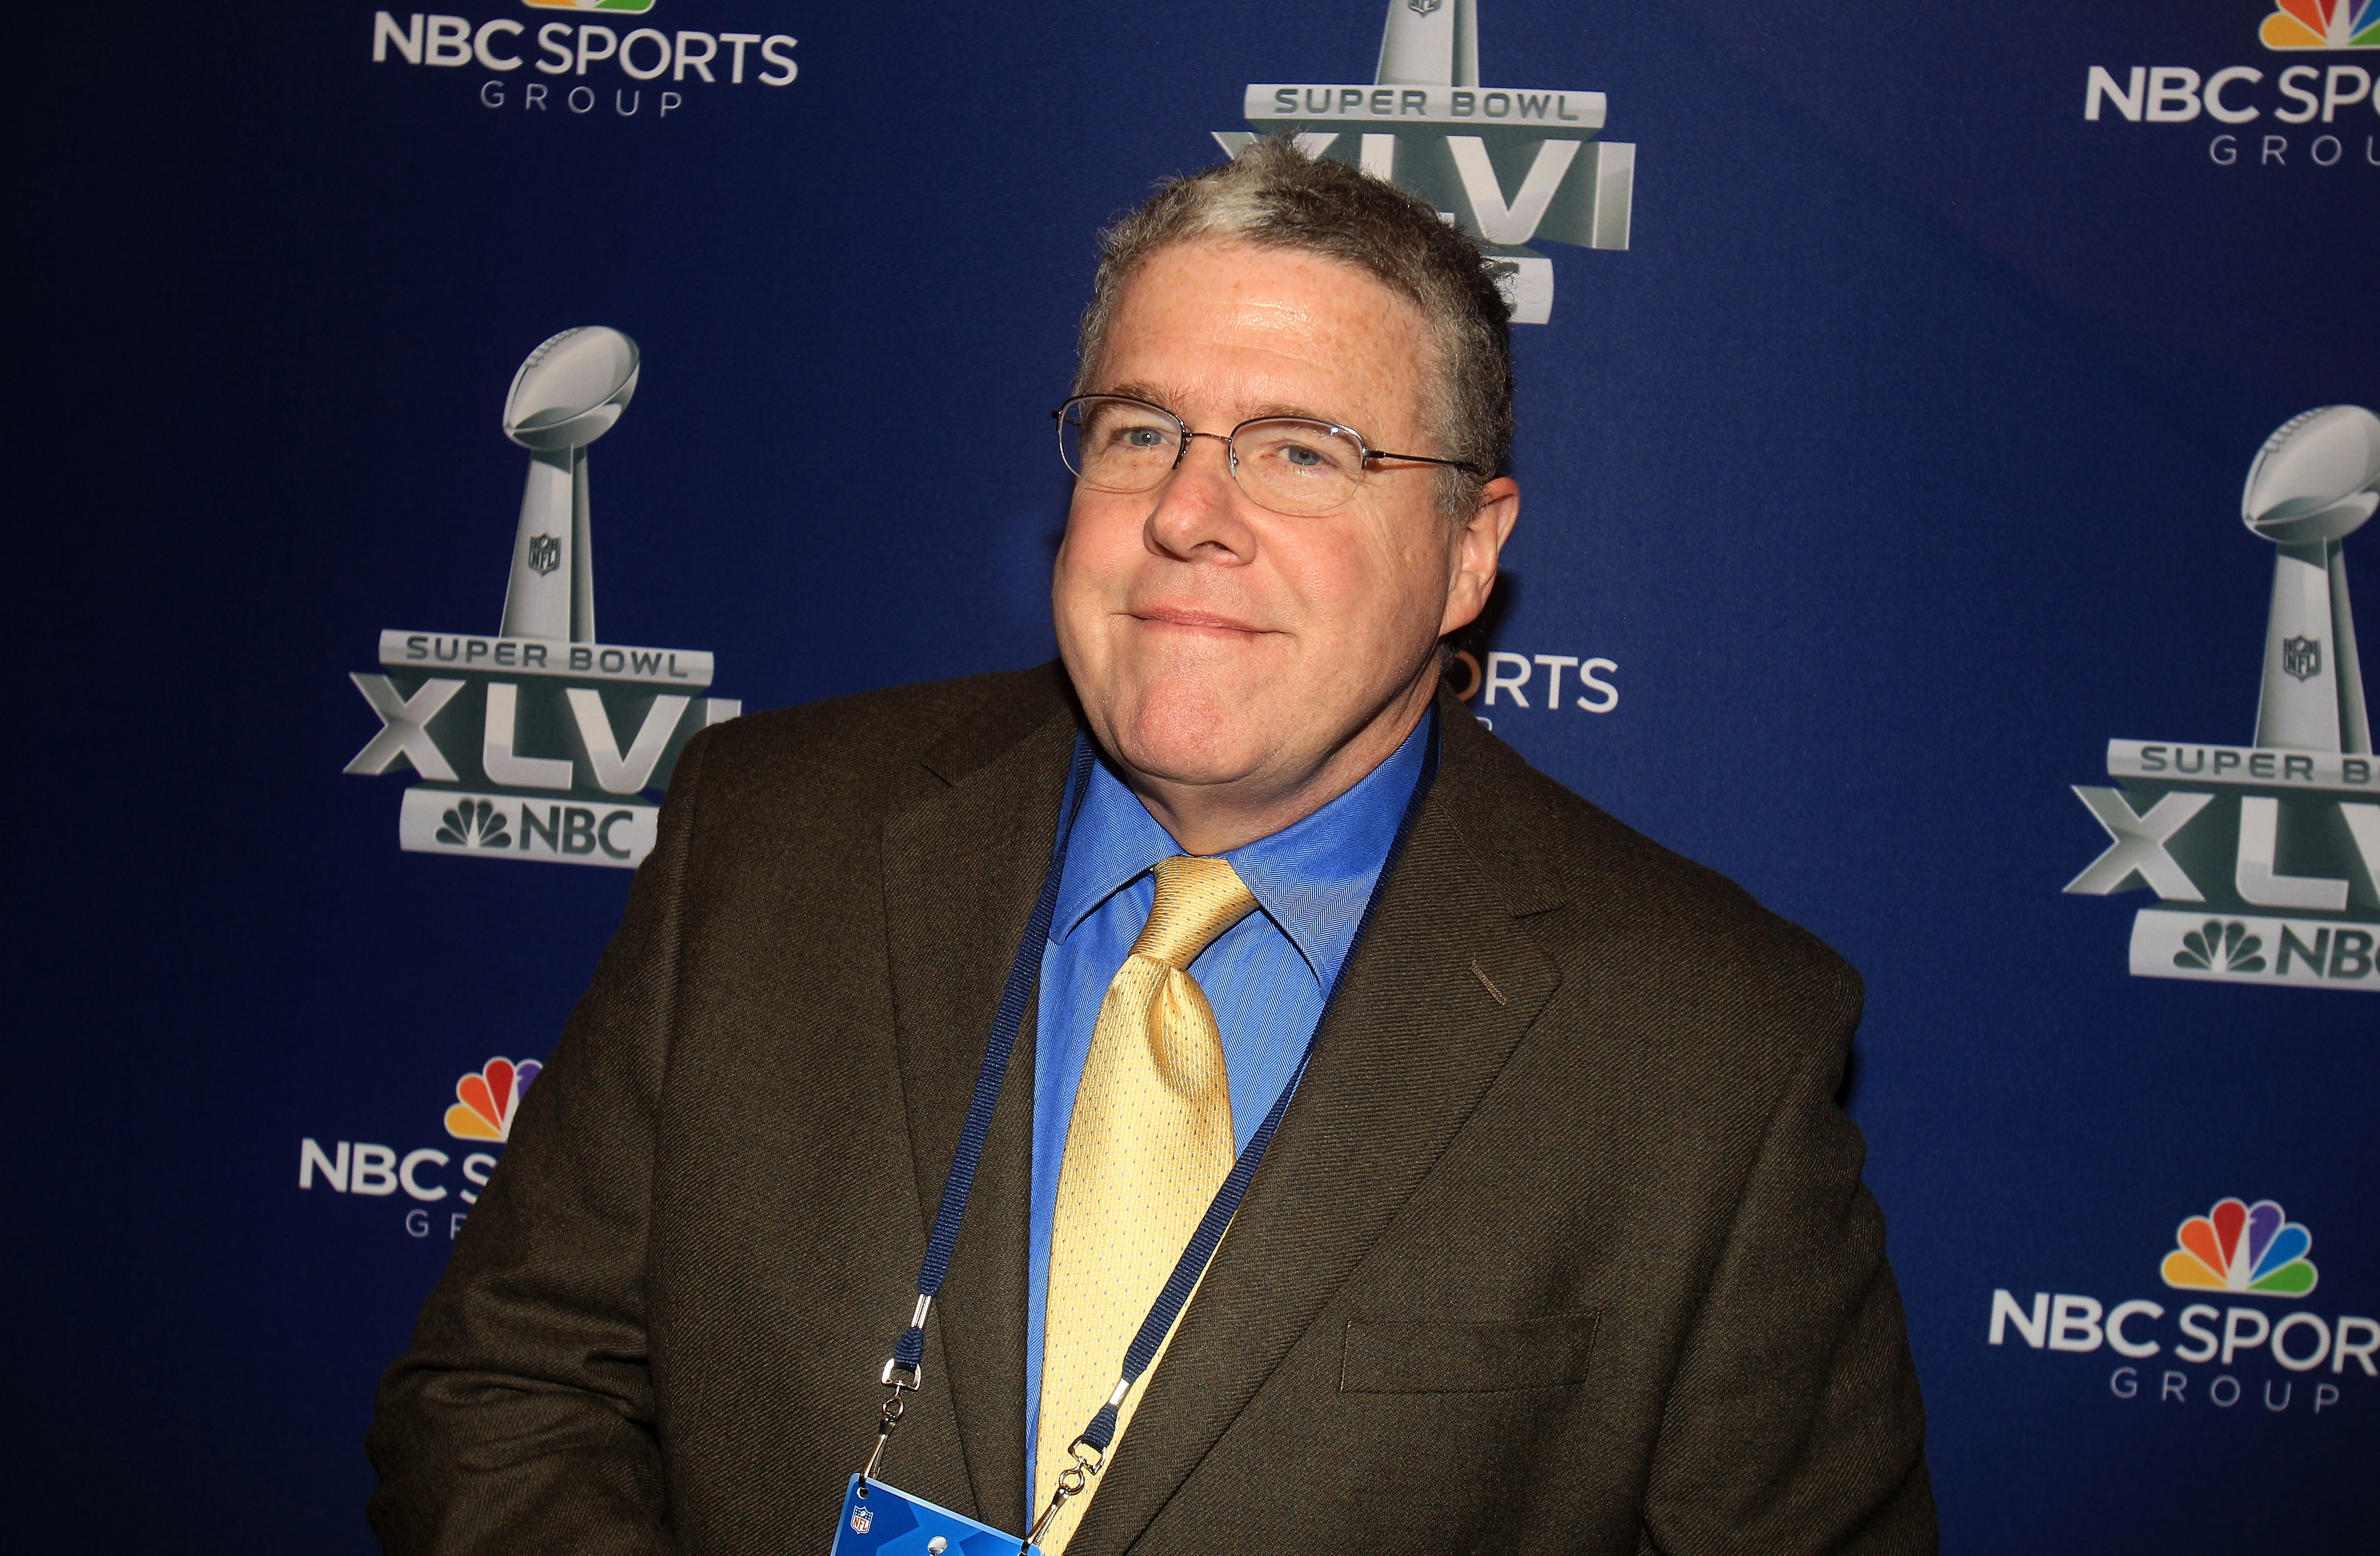 Super Bowl XLVI Broadcasters Press Conference